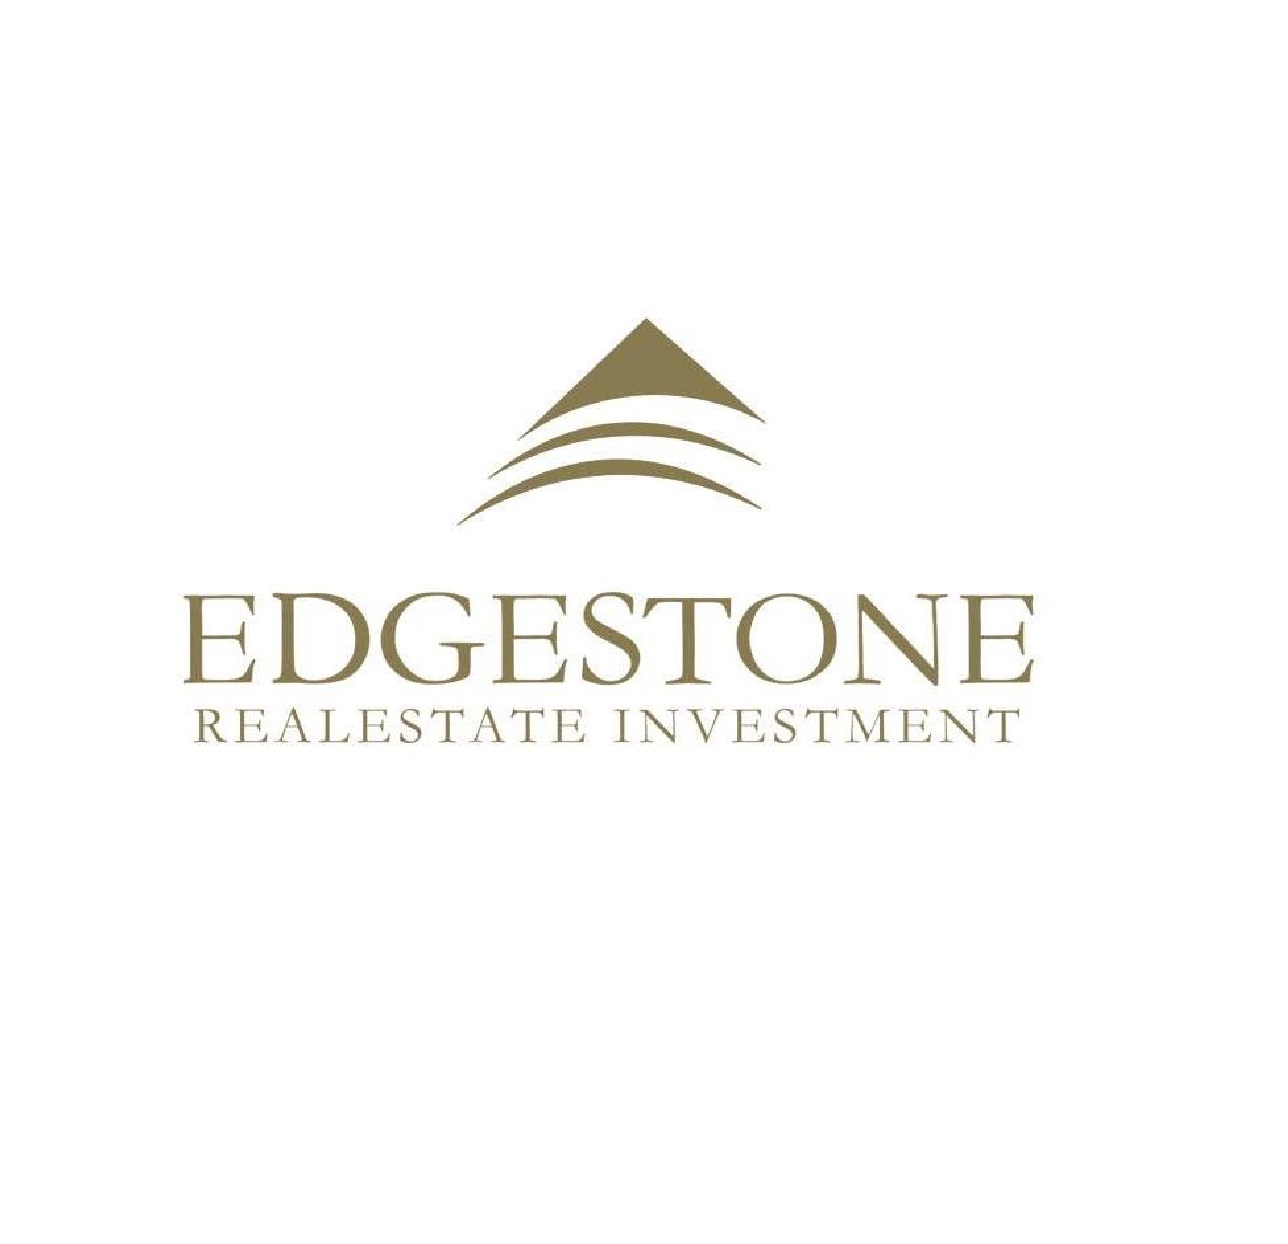 Edgestone for real estate developments